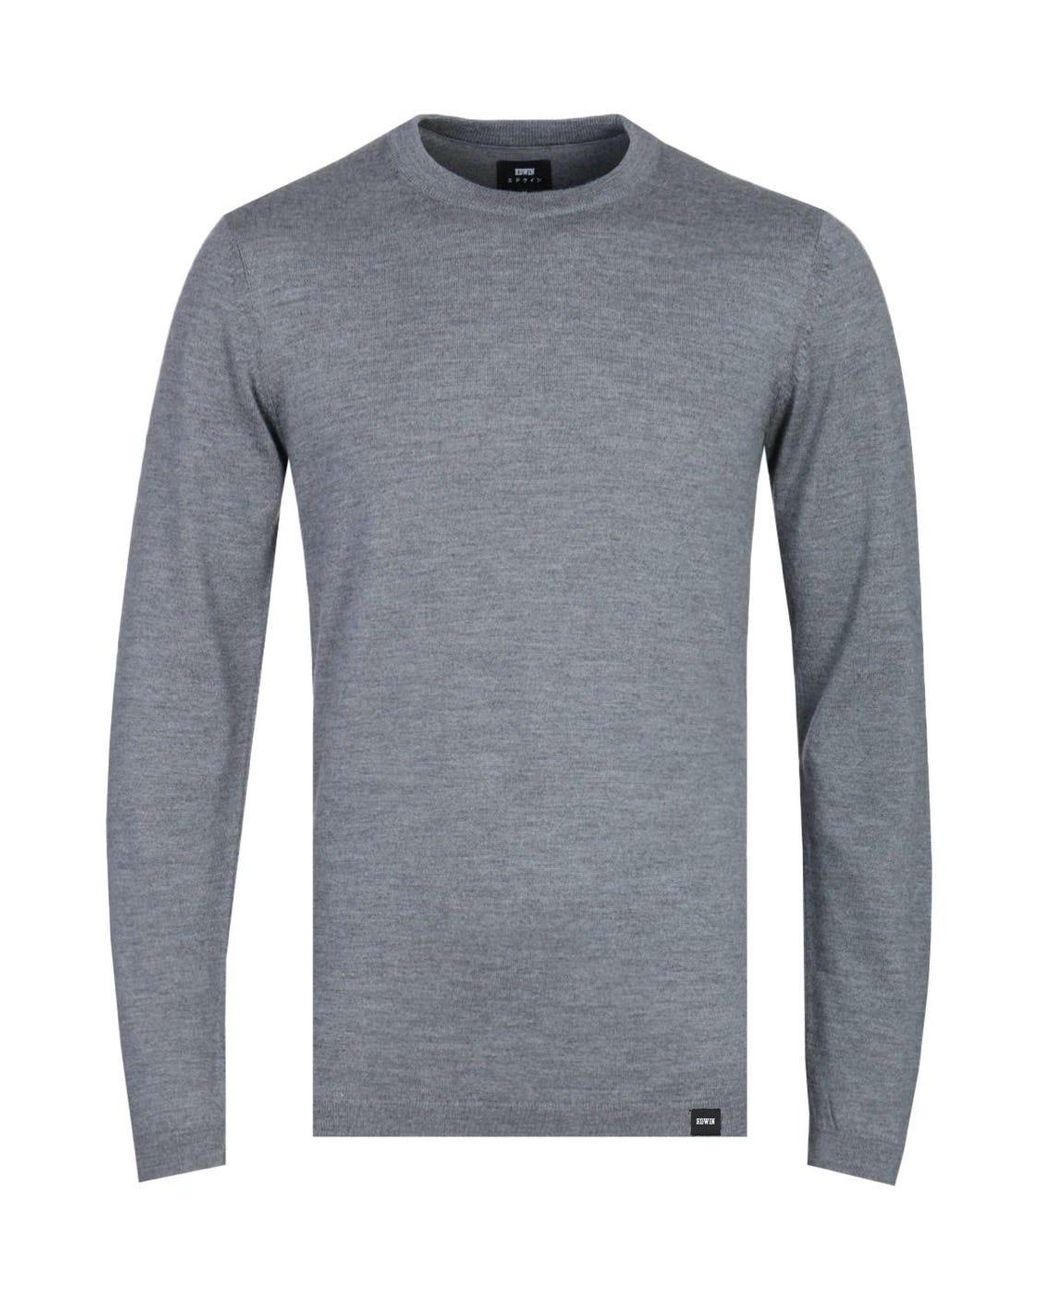 Edwin Merino Wool Grey Heather Crew Neck Sweater in Gray for Men - Lyst